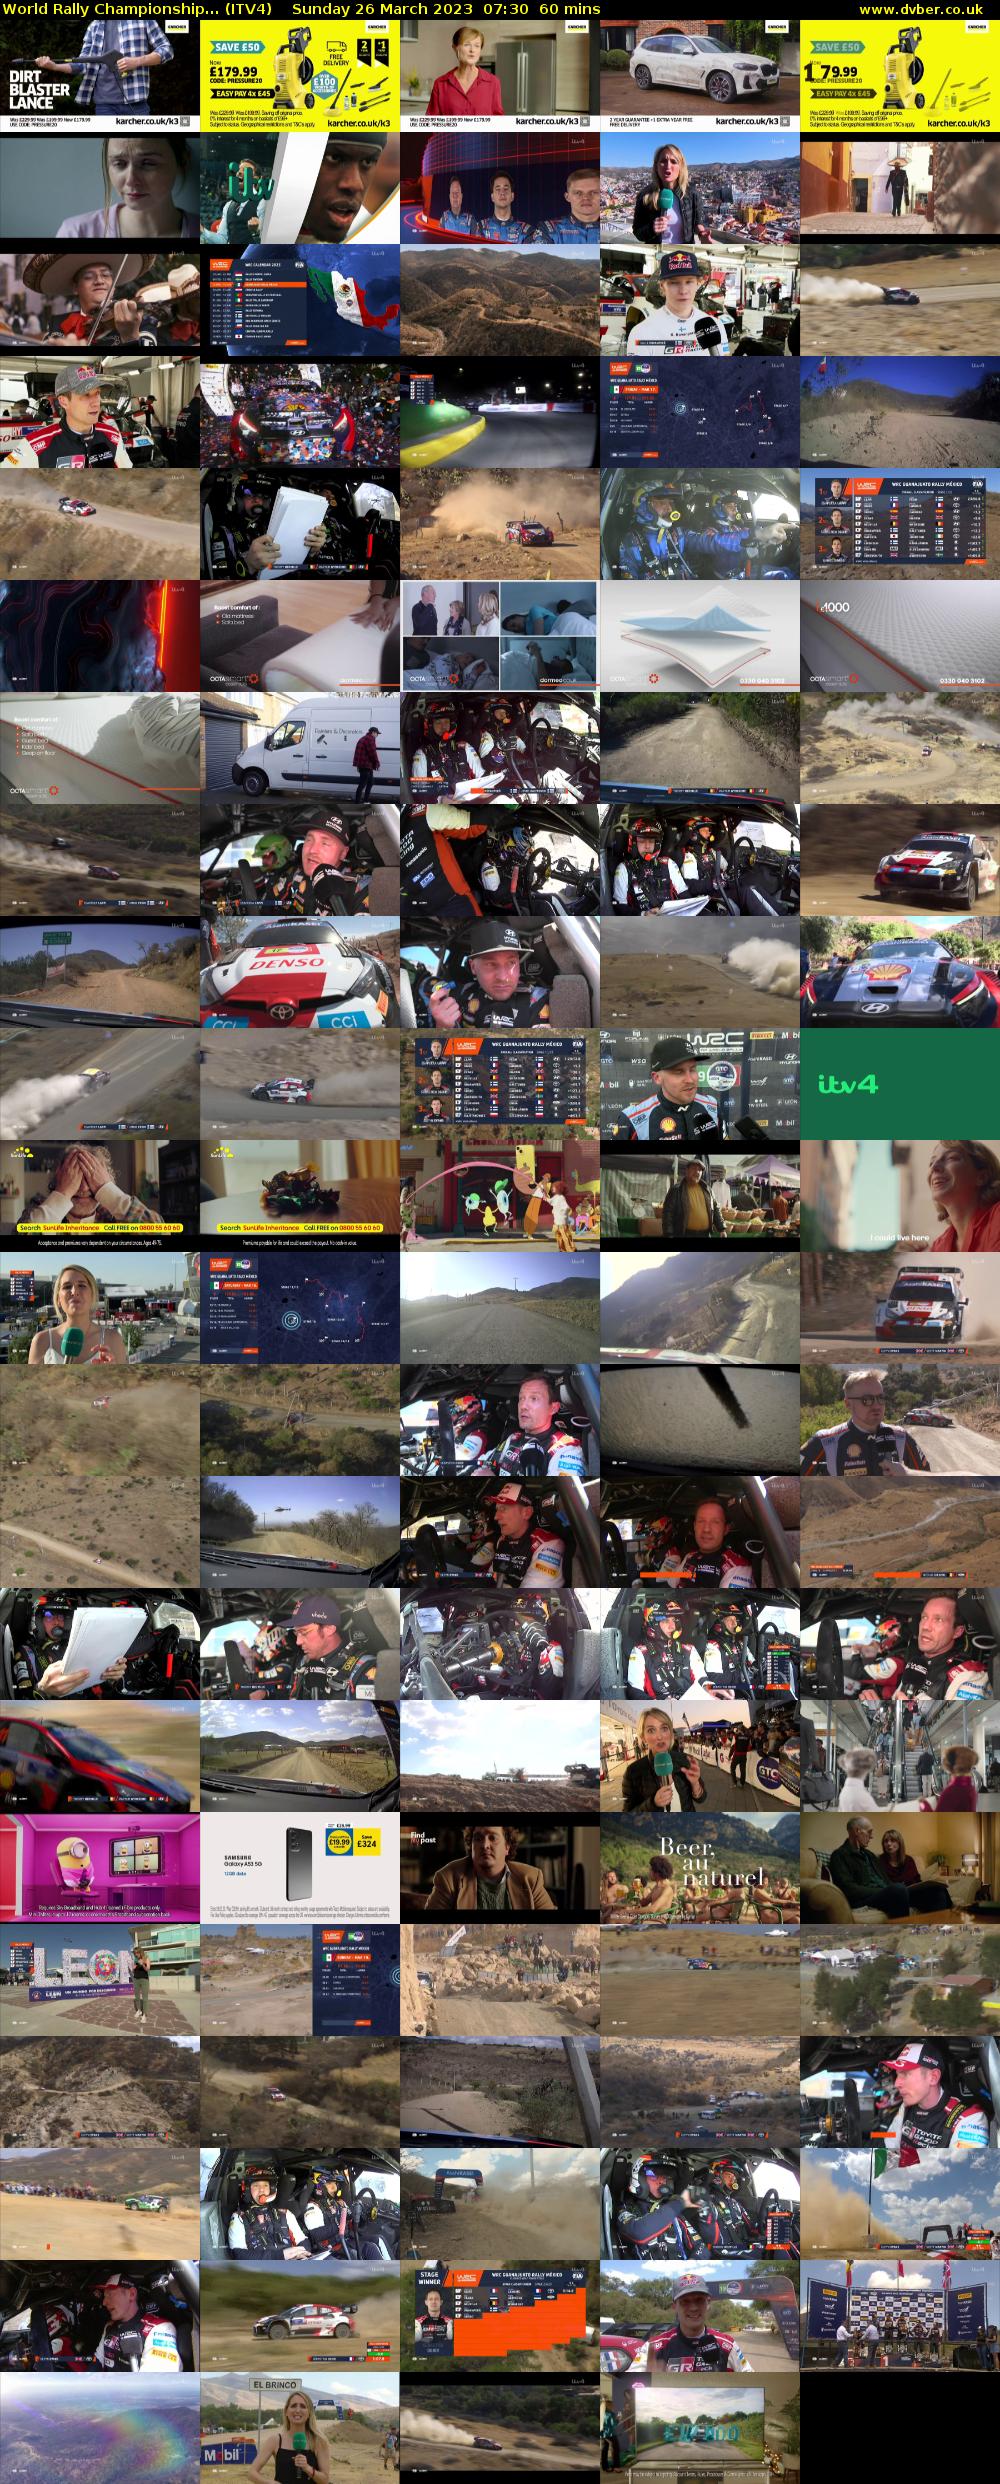 World Rally Championship... (ITV4) Sunday 26 March 2023 07:30 - 08:30